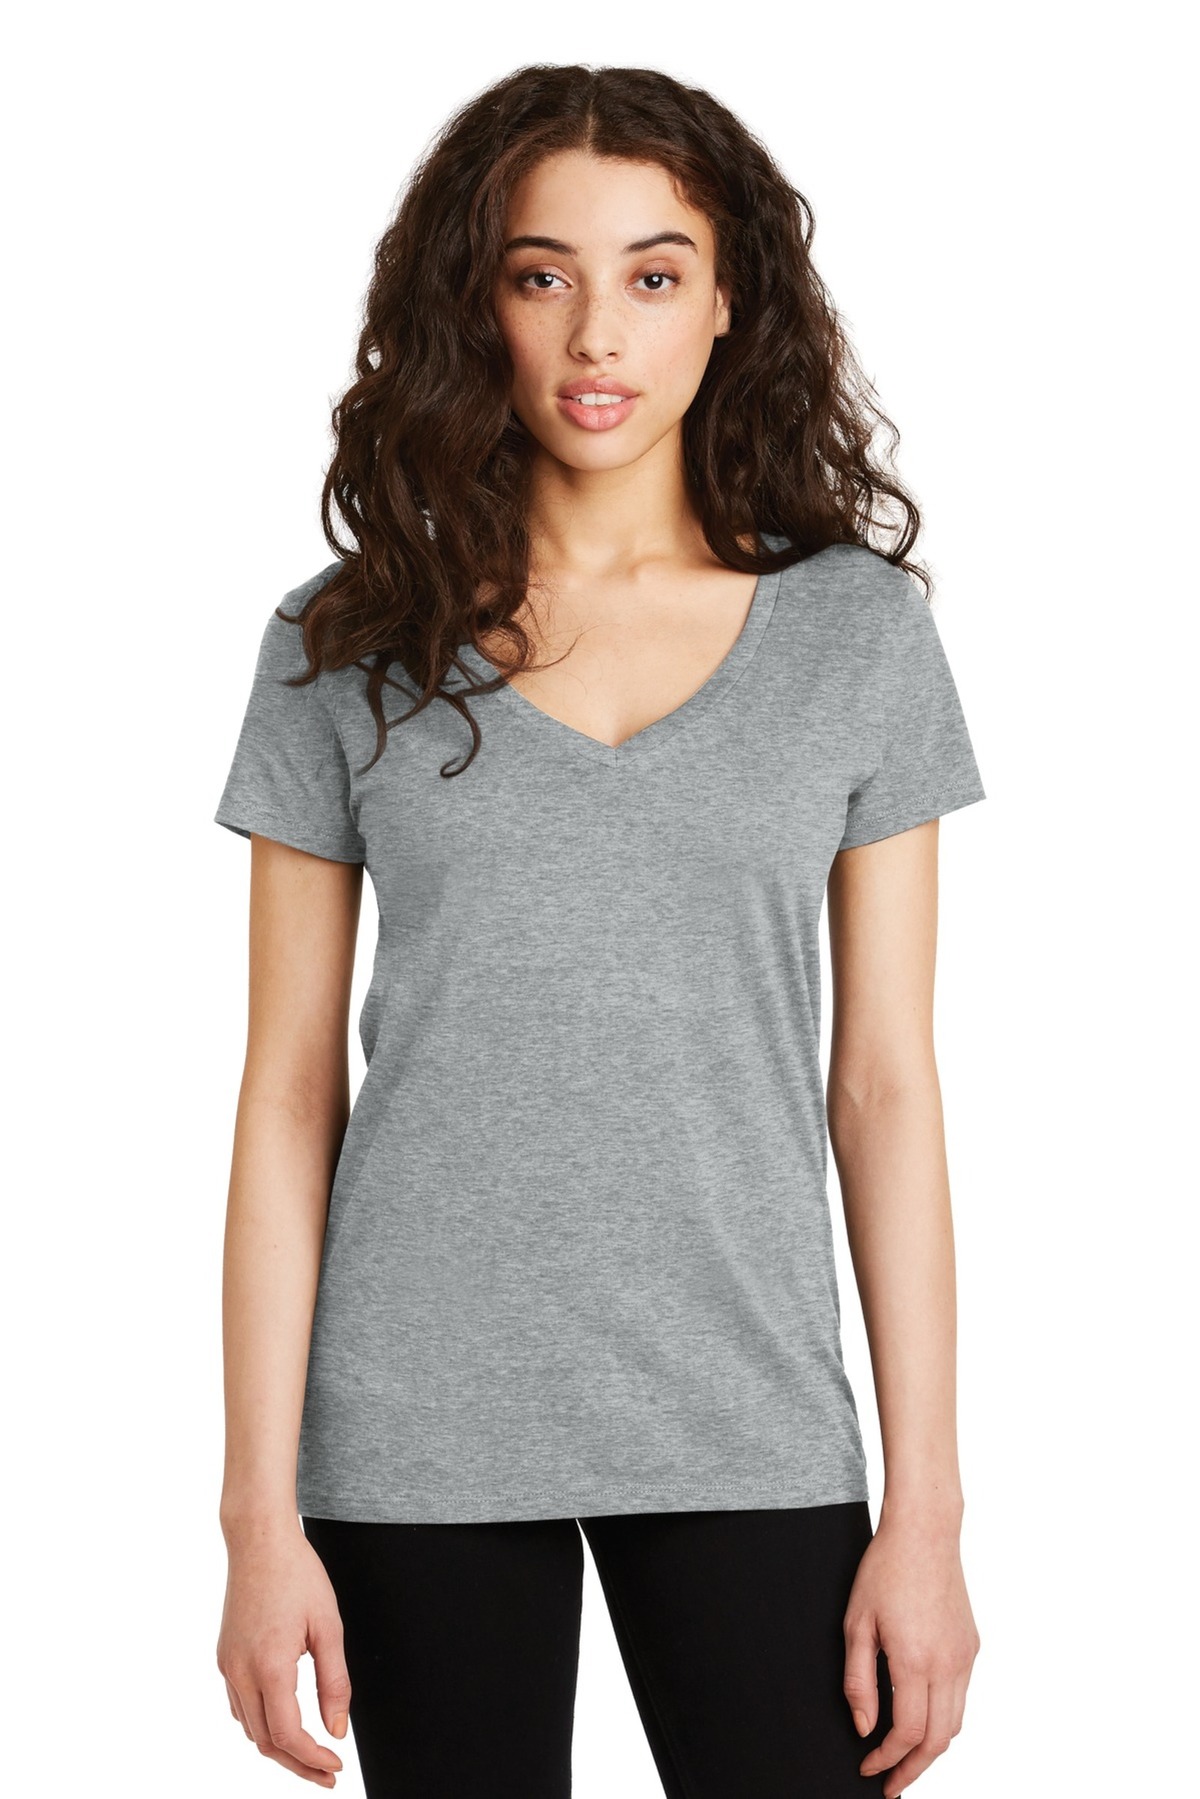 Alternative Embroidered Women's Legacy V-Neck T-Shirt | Custom ...